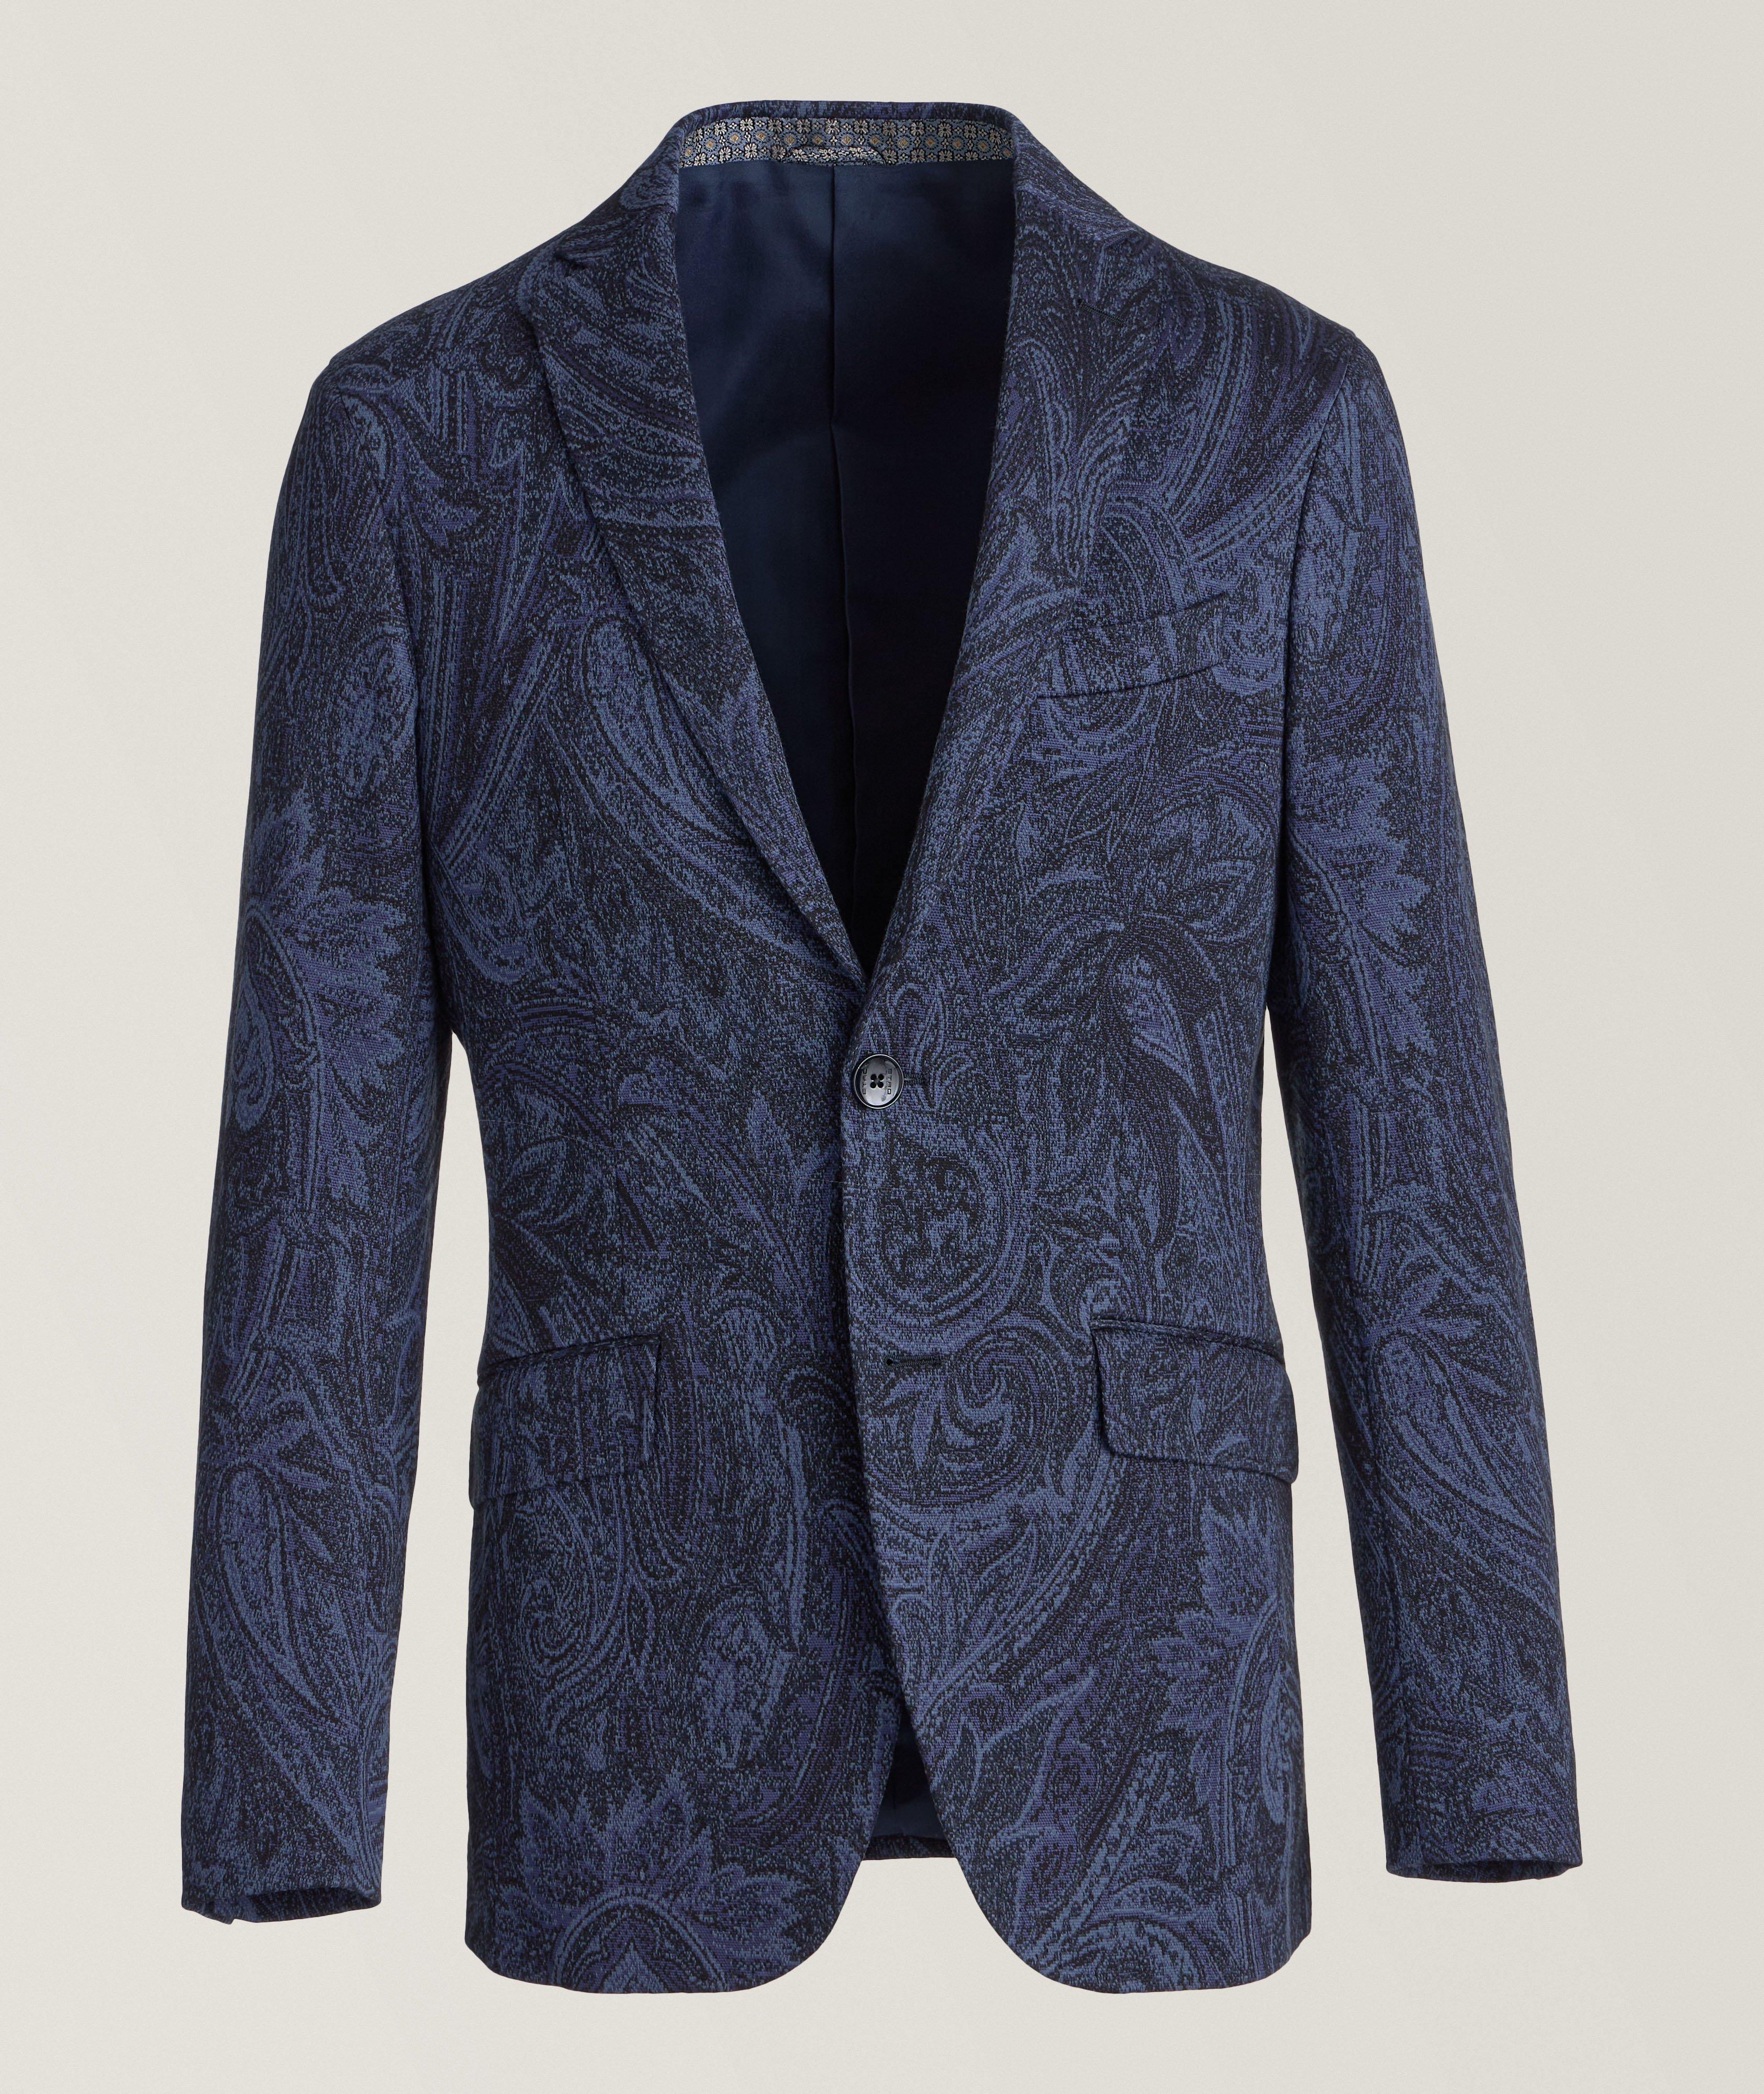 Etro Tonal Textured Paisley Sport Jacket